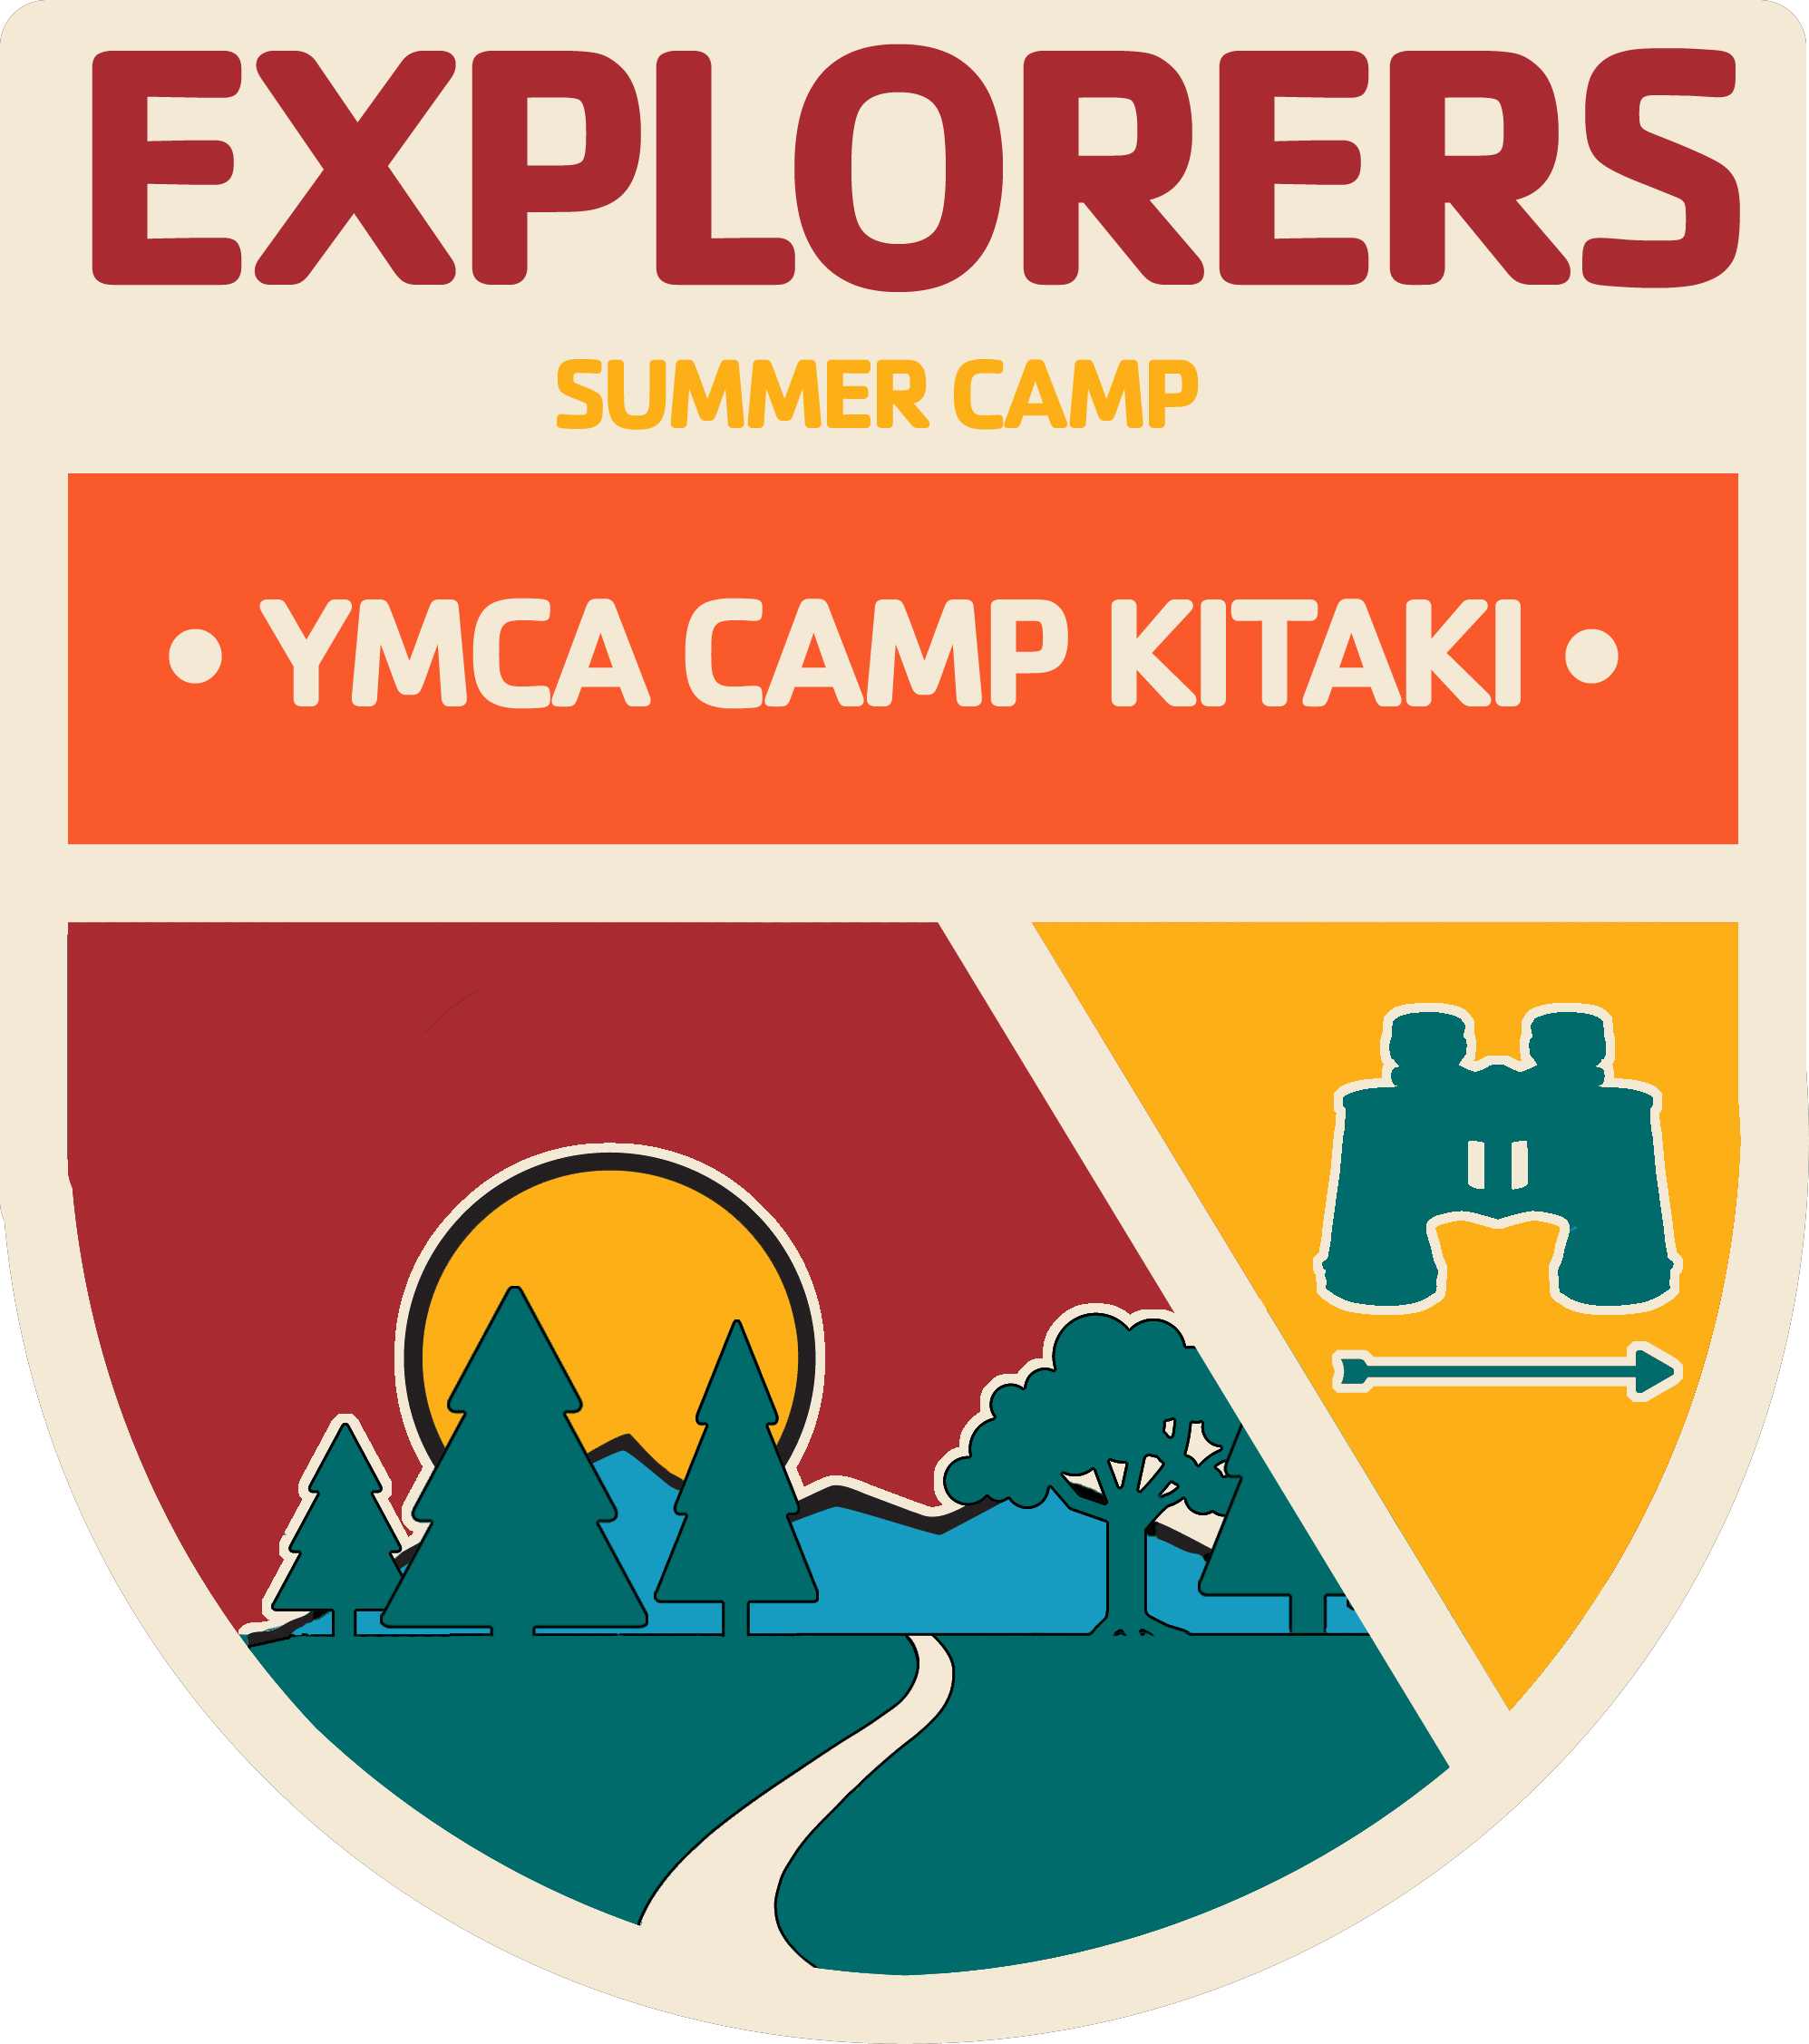 A badge for the Explorer program